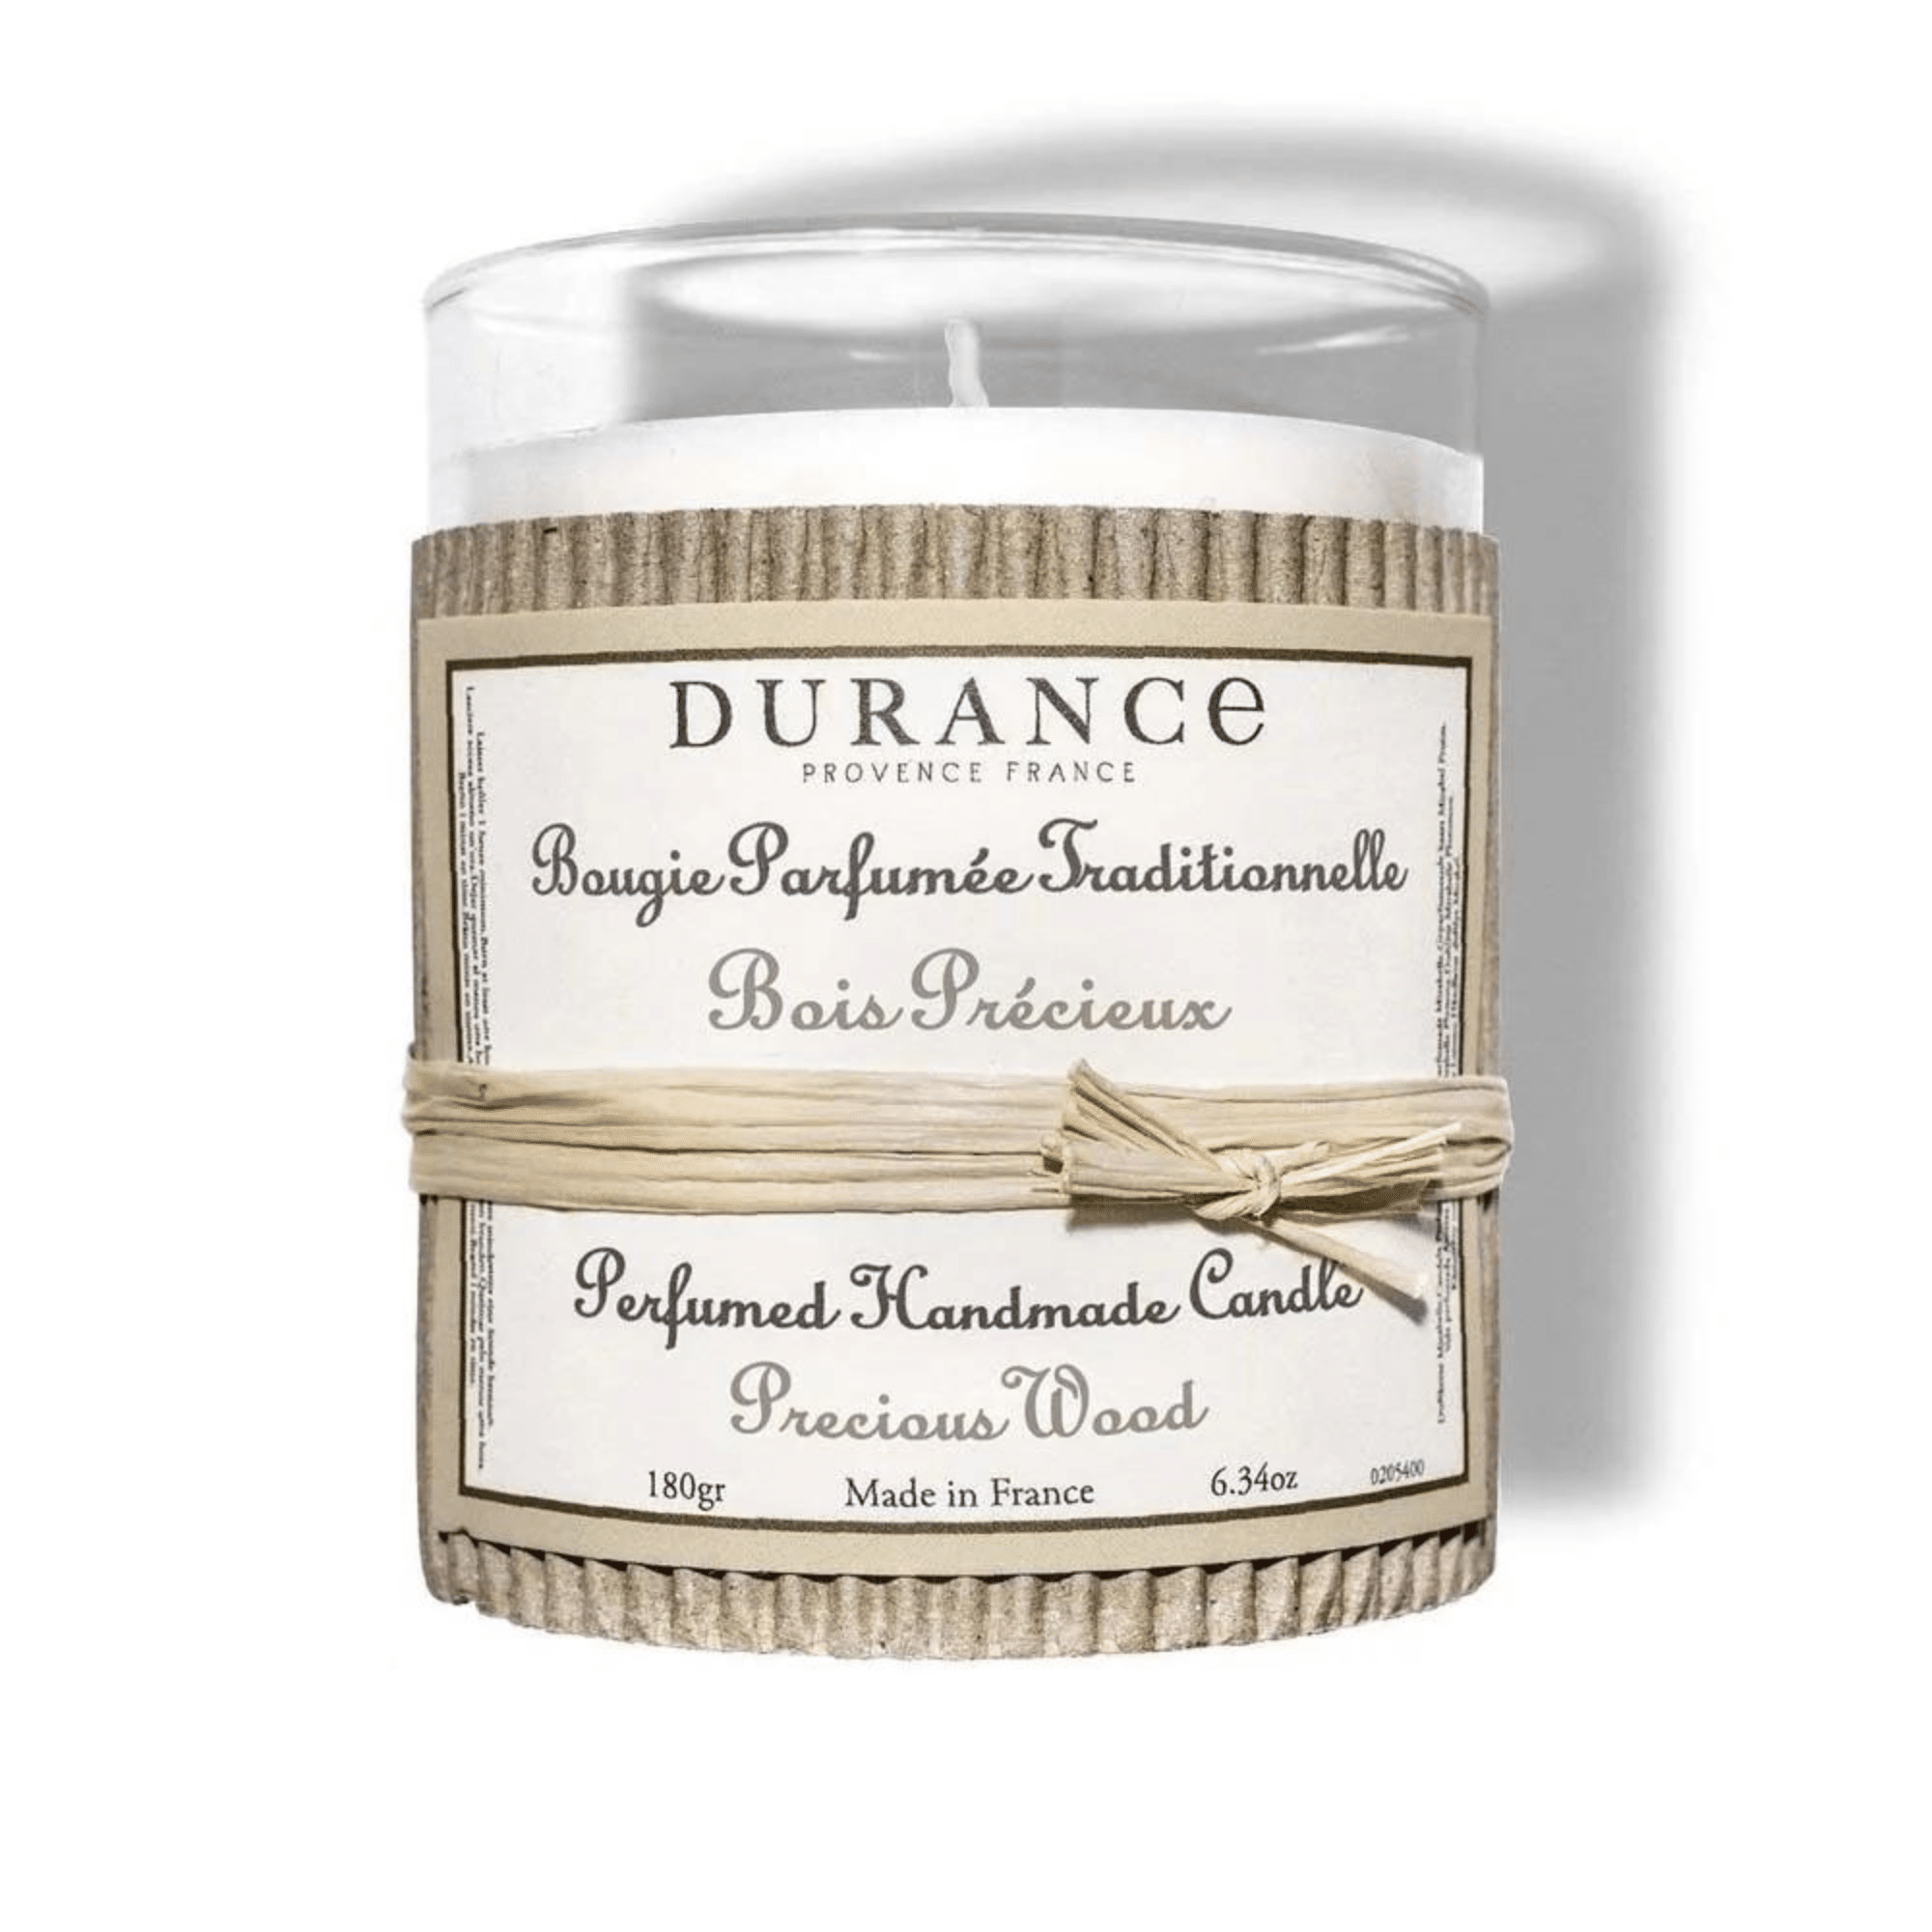 Durance Perfumed Handmade Candle Precious Wood